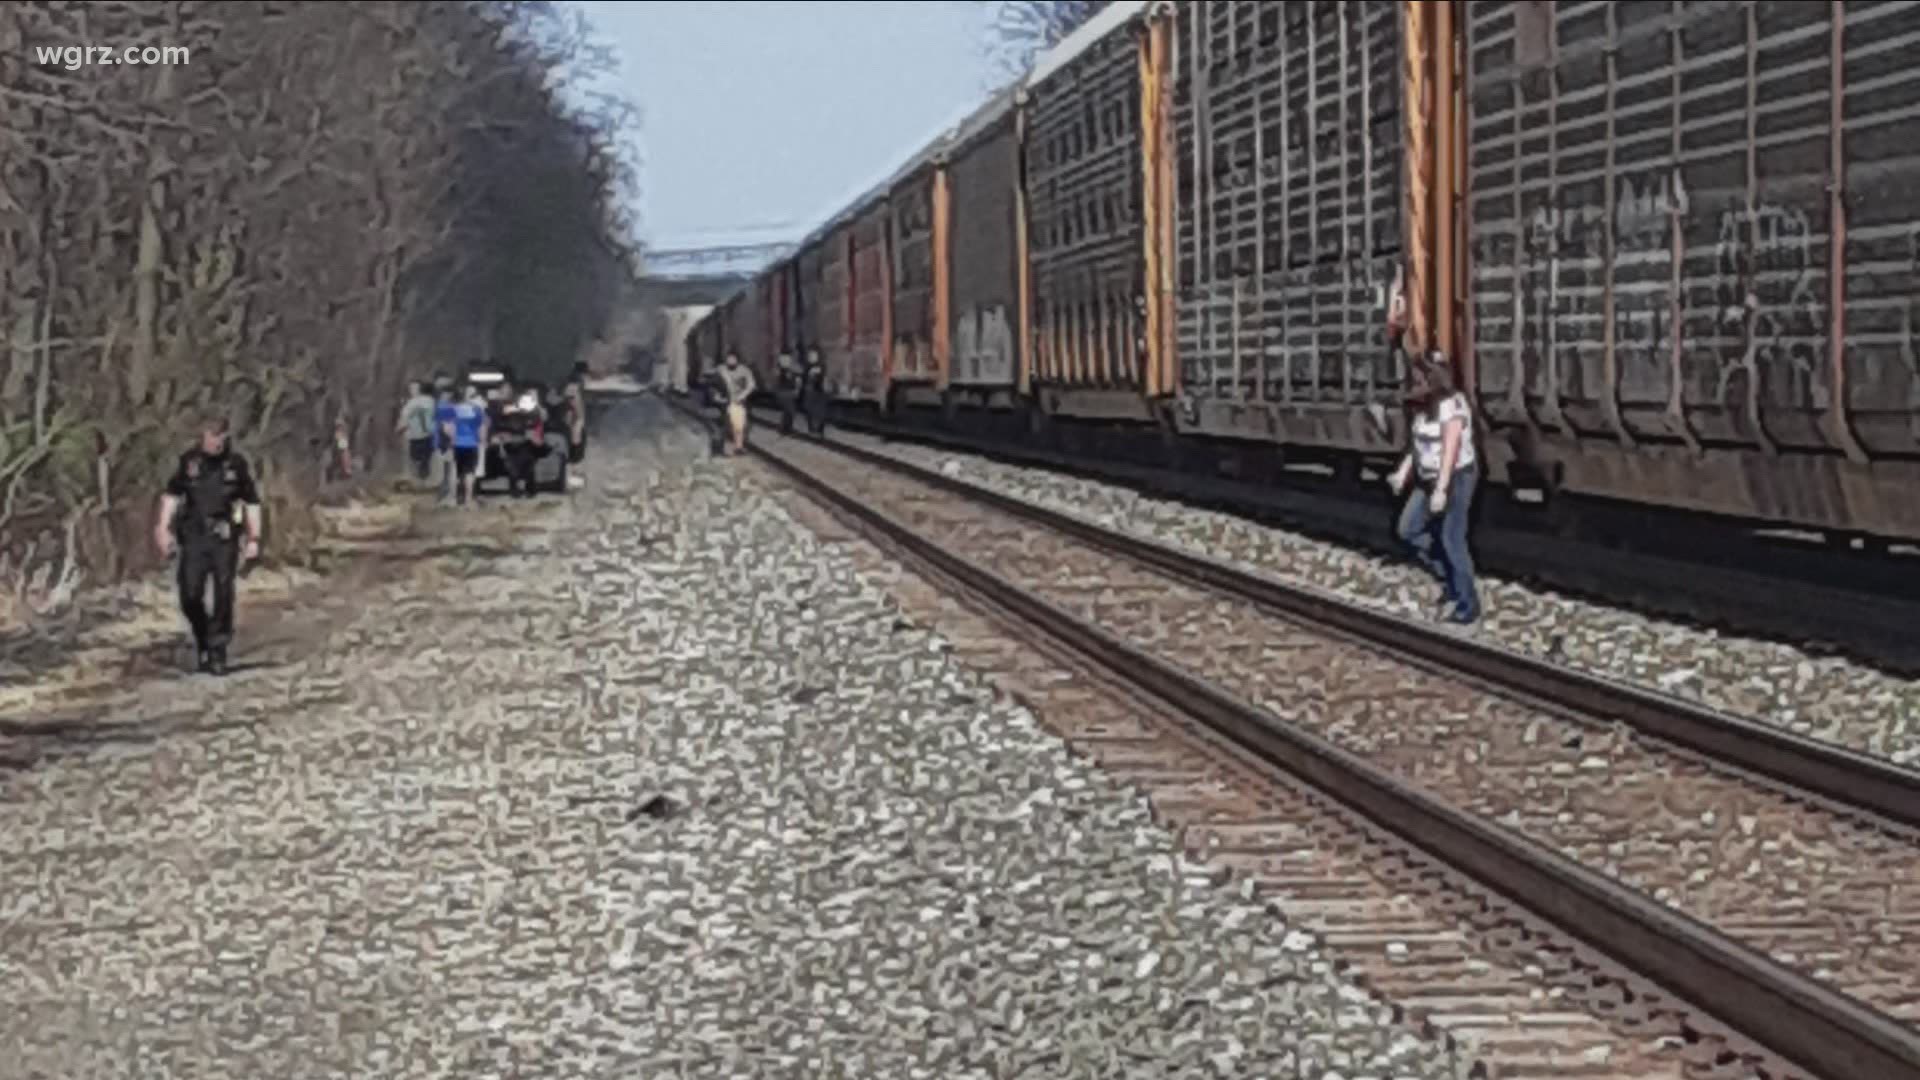 Deadly train crash in Westfield